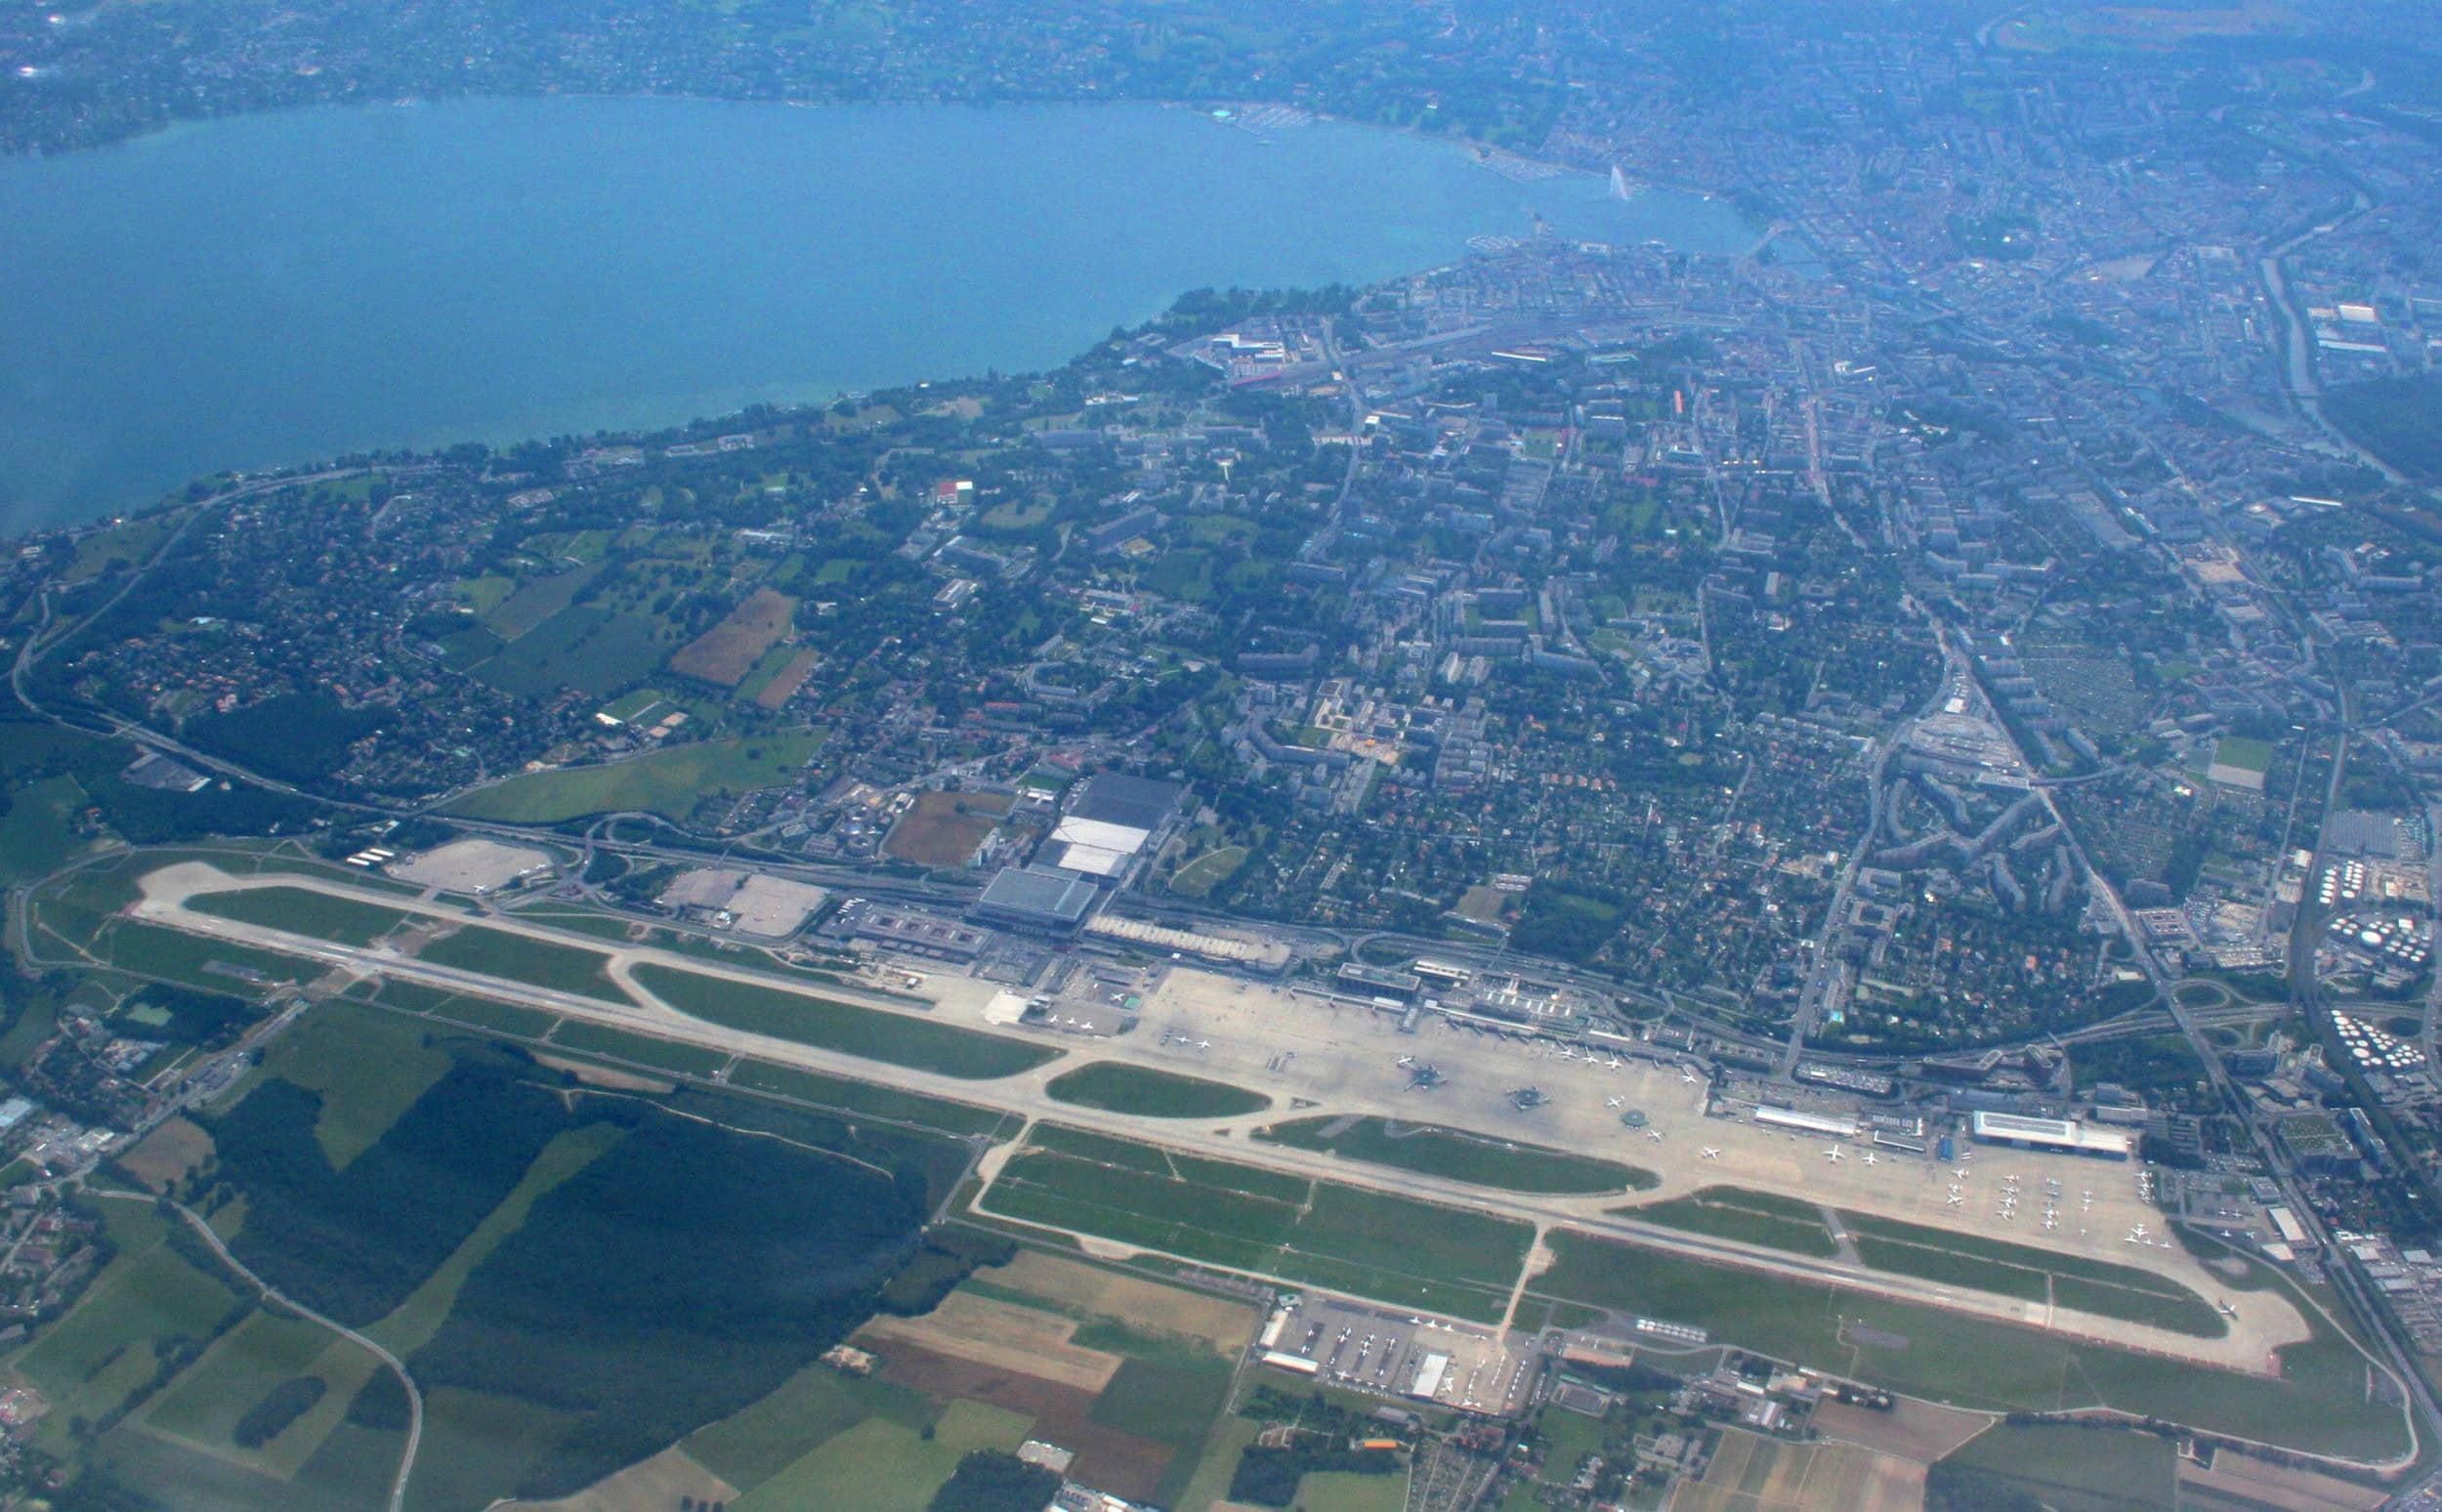 Geneva-on-the-Lake Municipal Airport